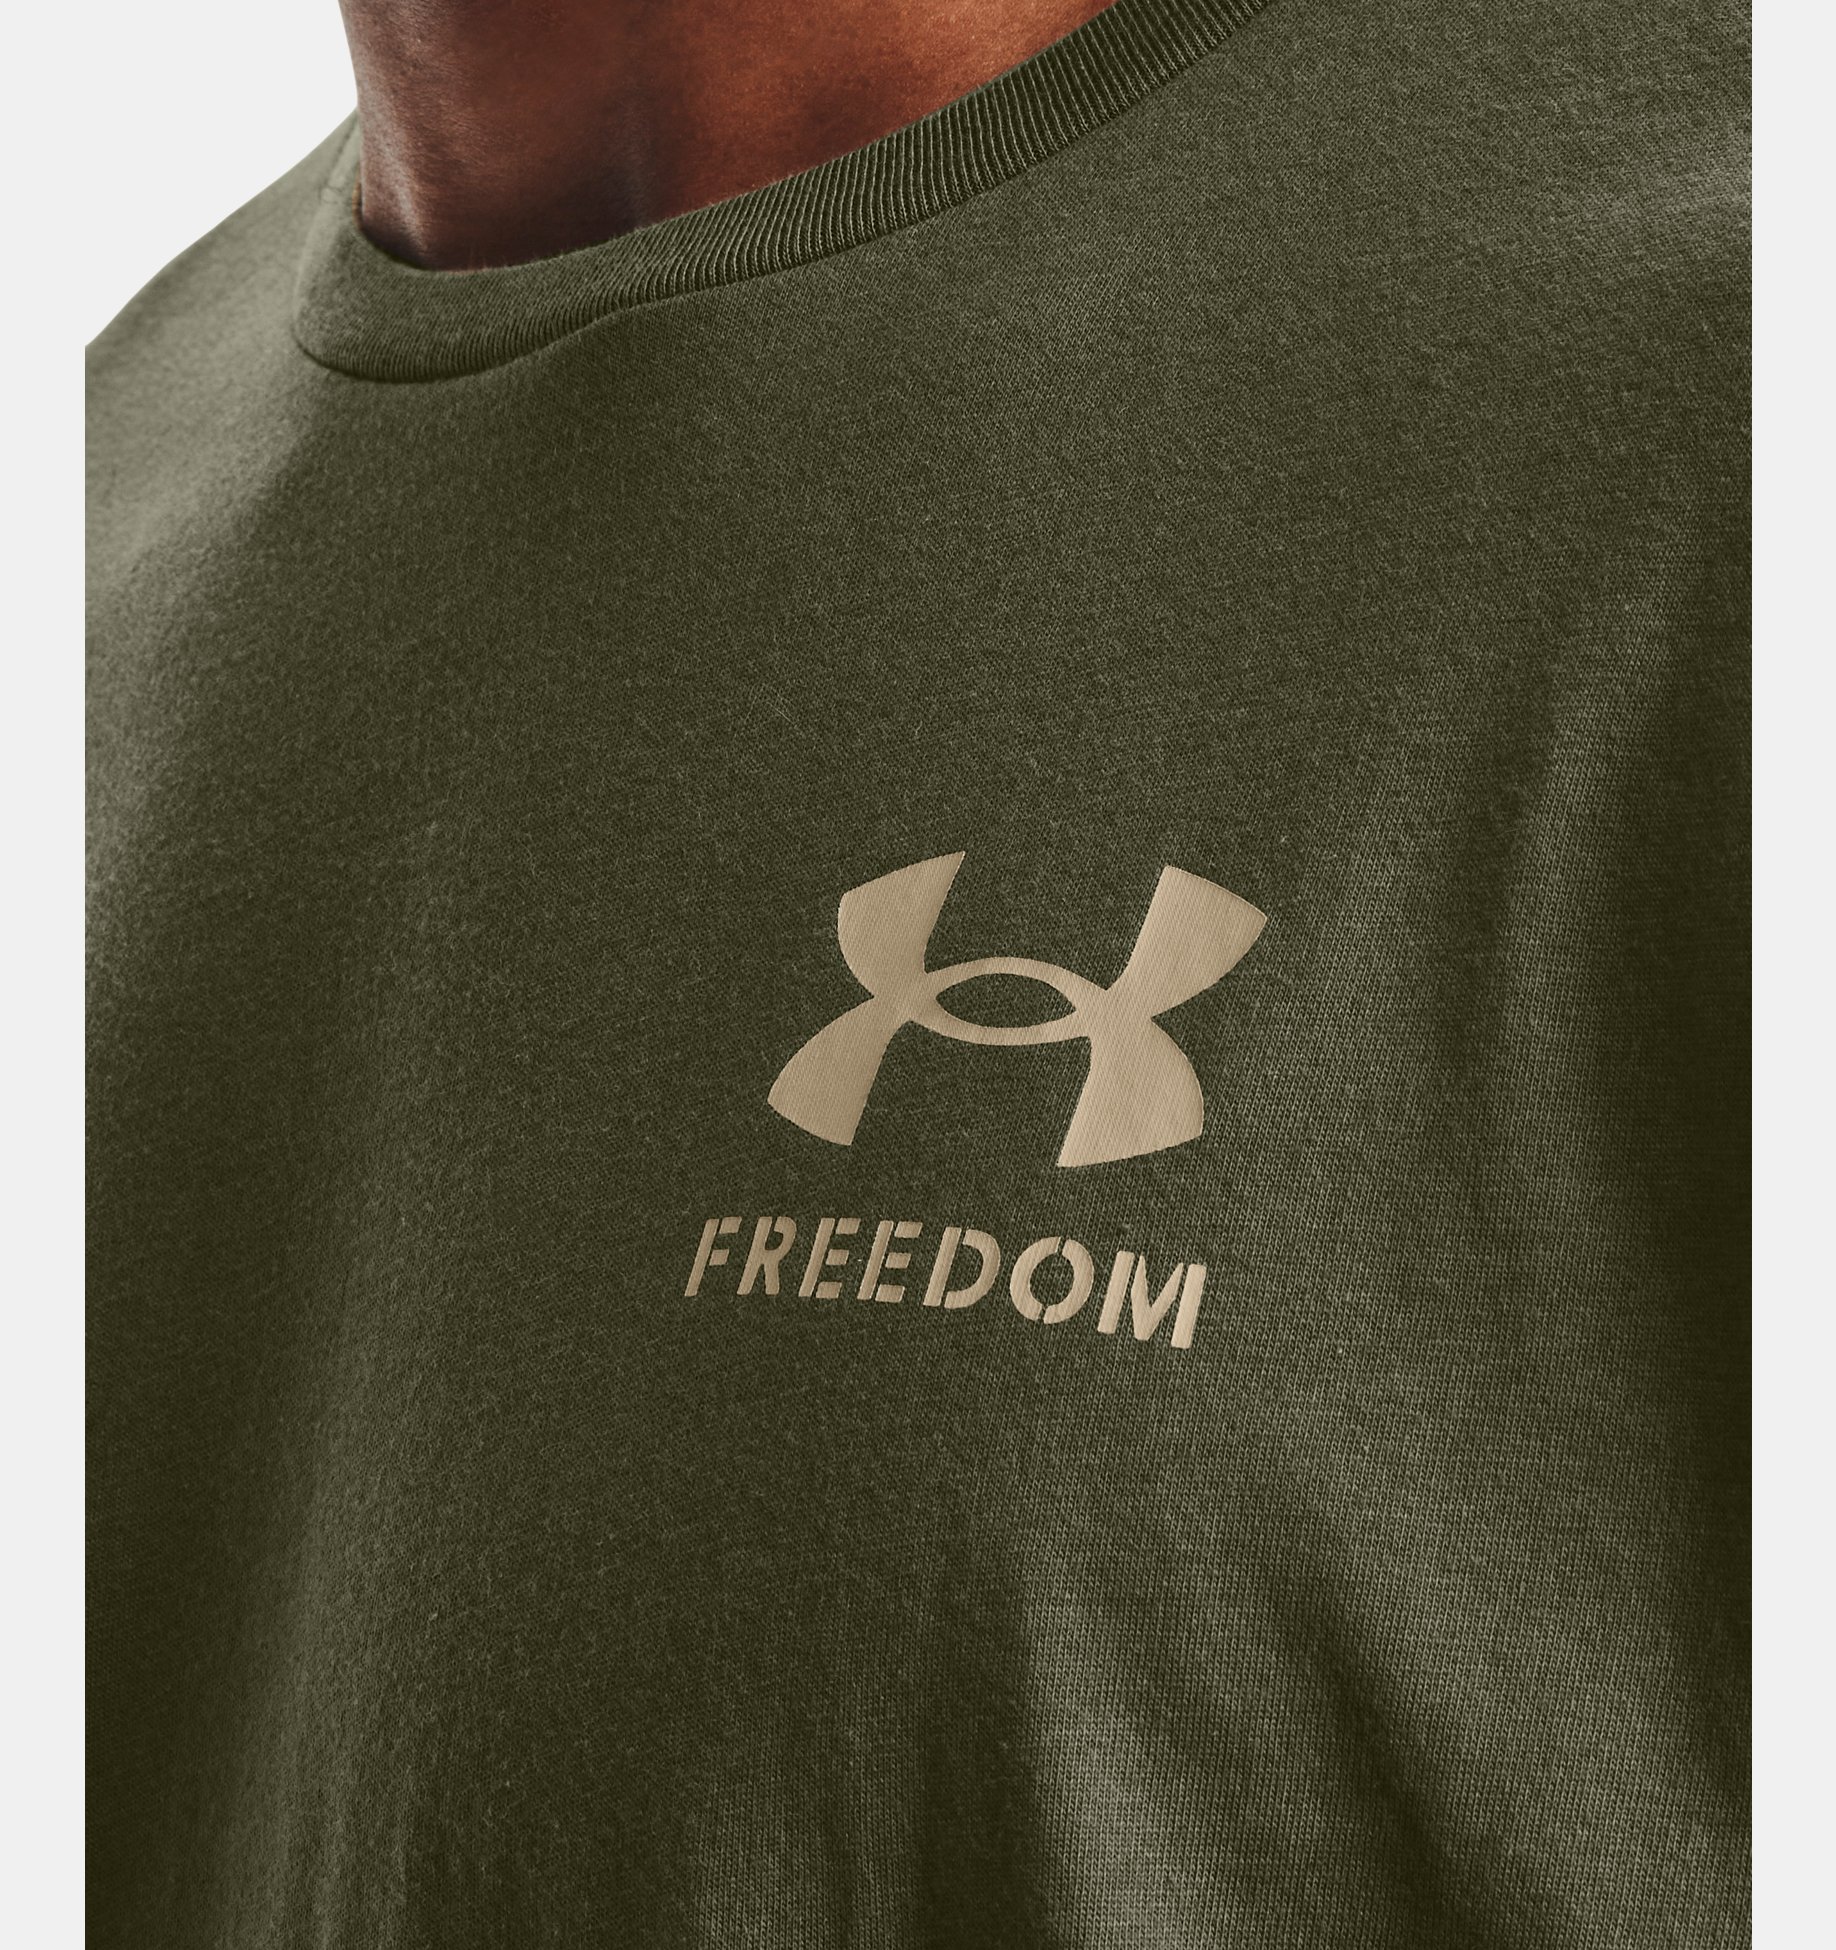 Under Armour Men's New Freedom Flag Long Sleeve T-Shirt 